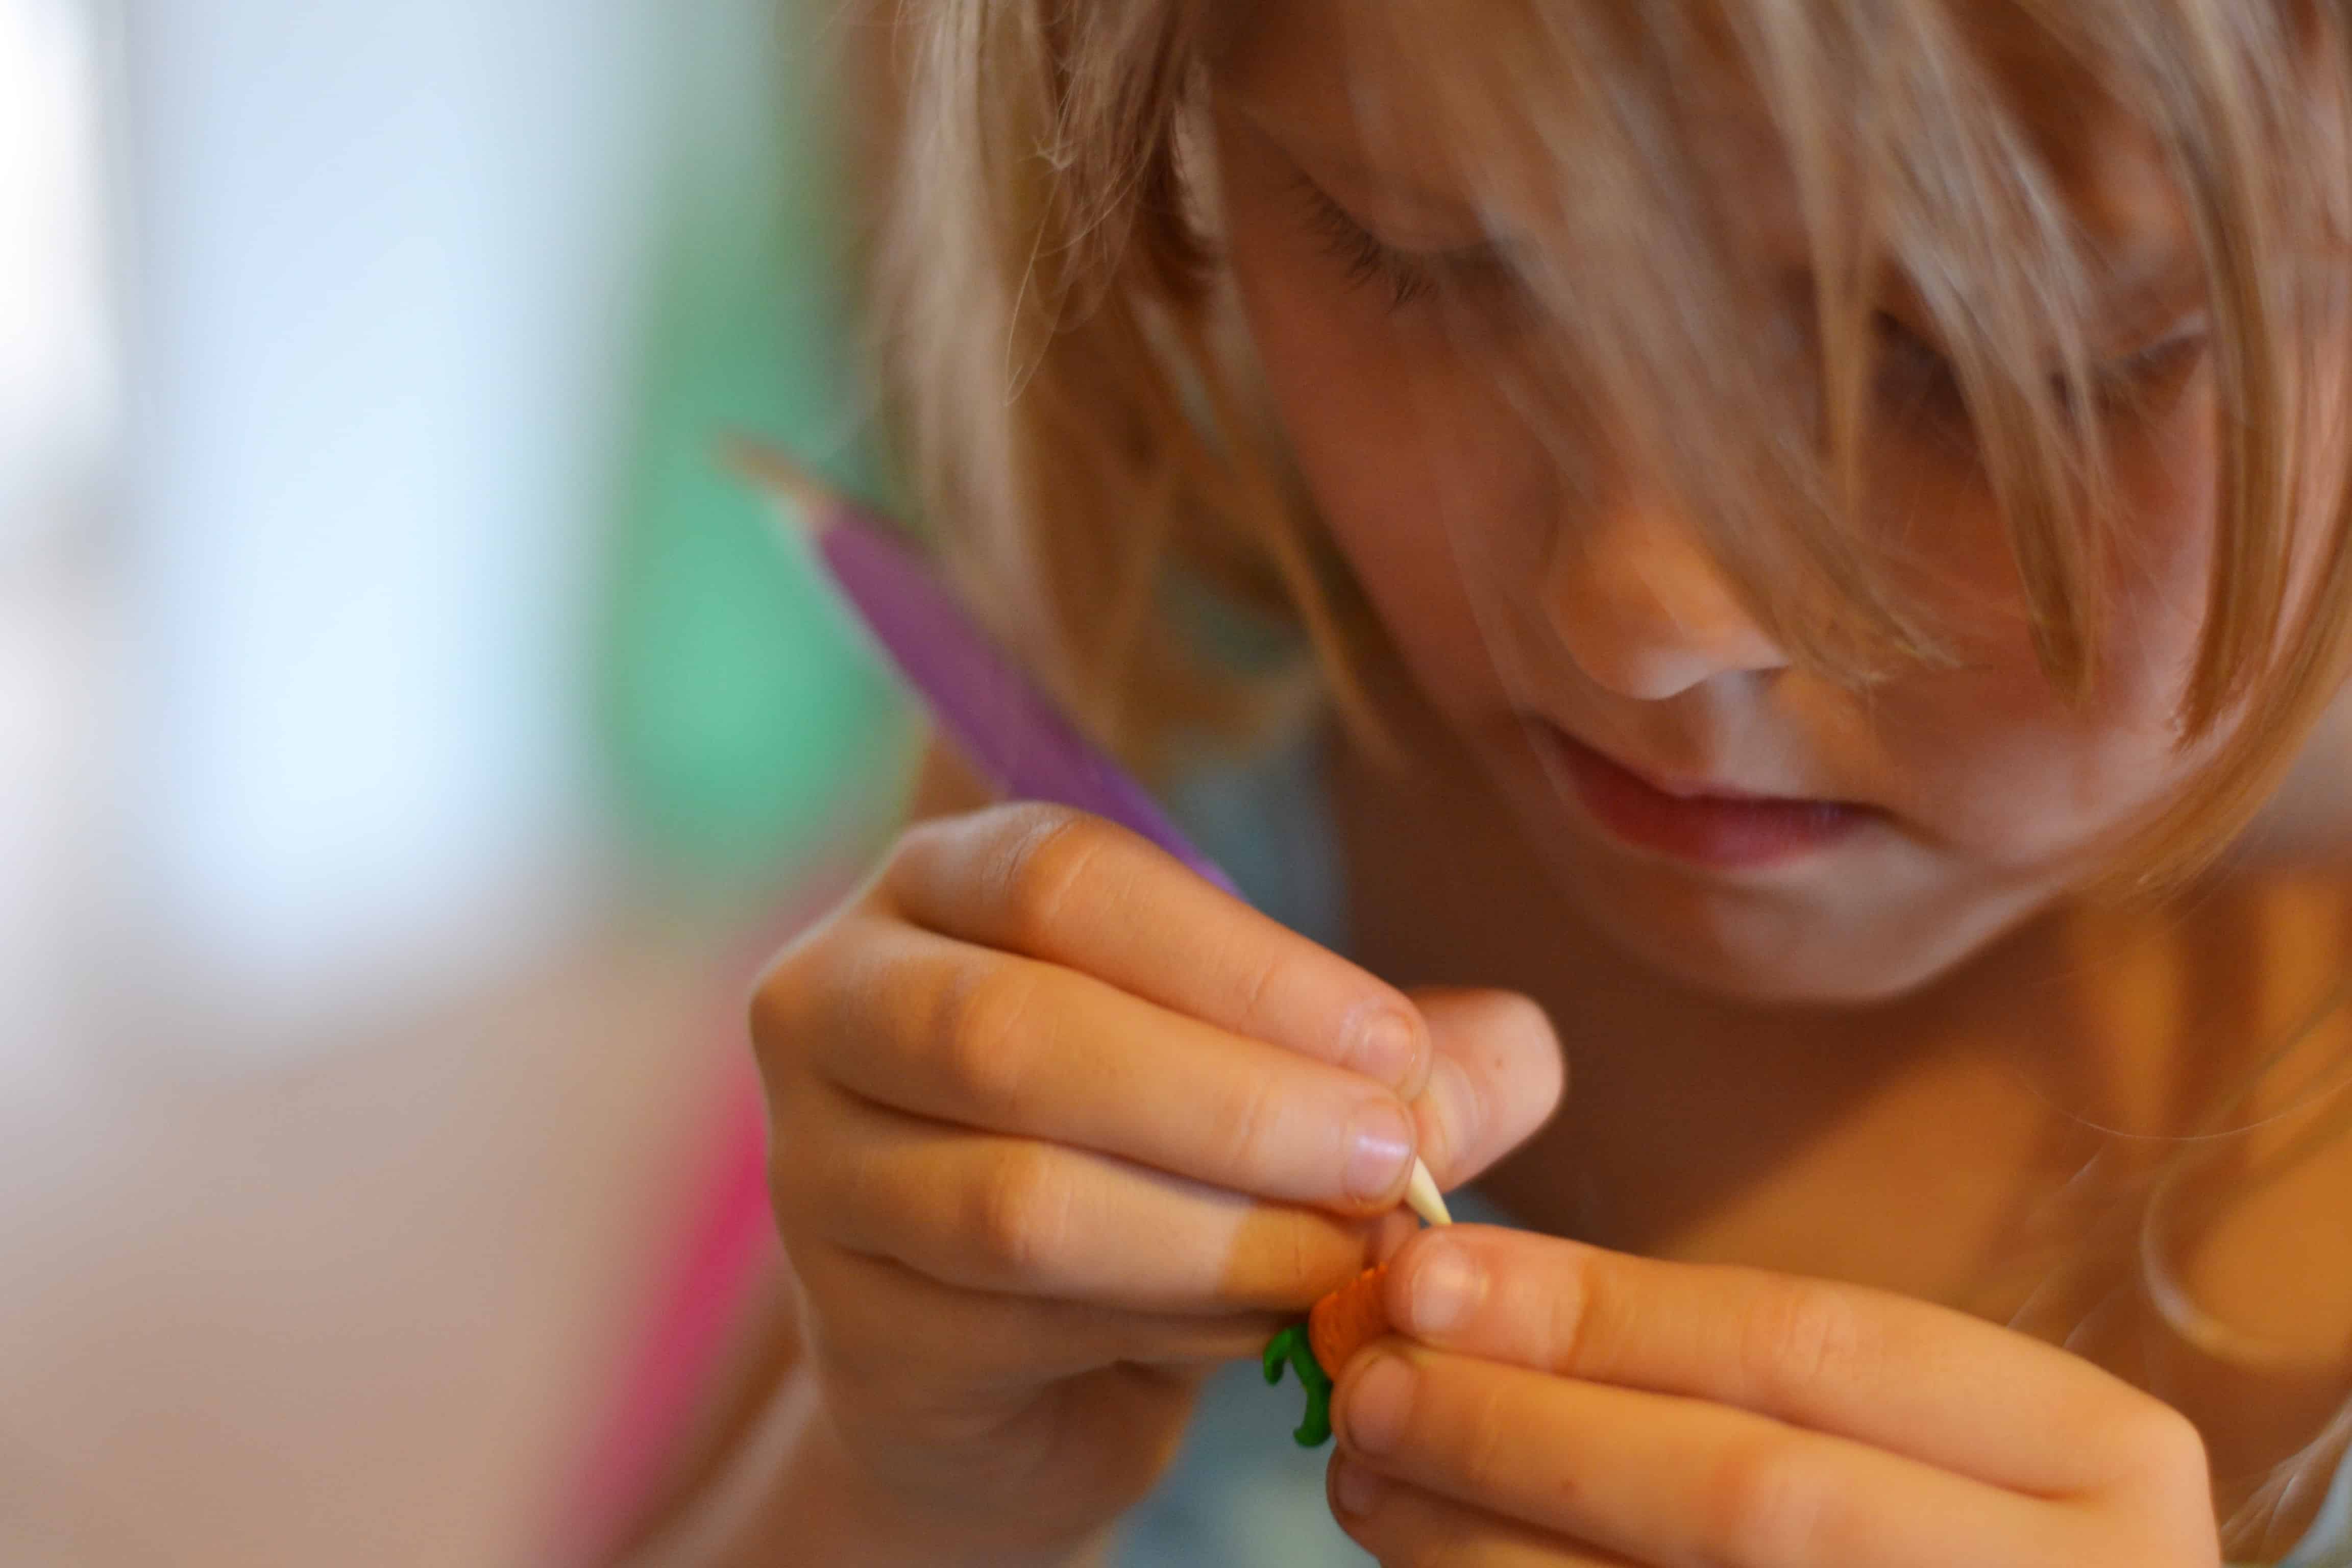 Creating clay miniatures- Fun kids craft ideas